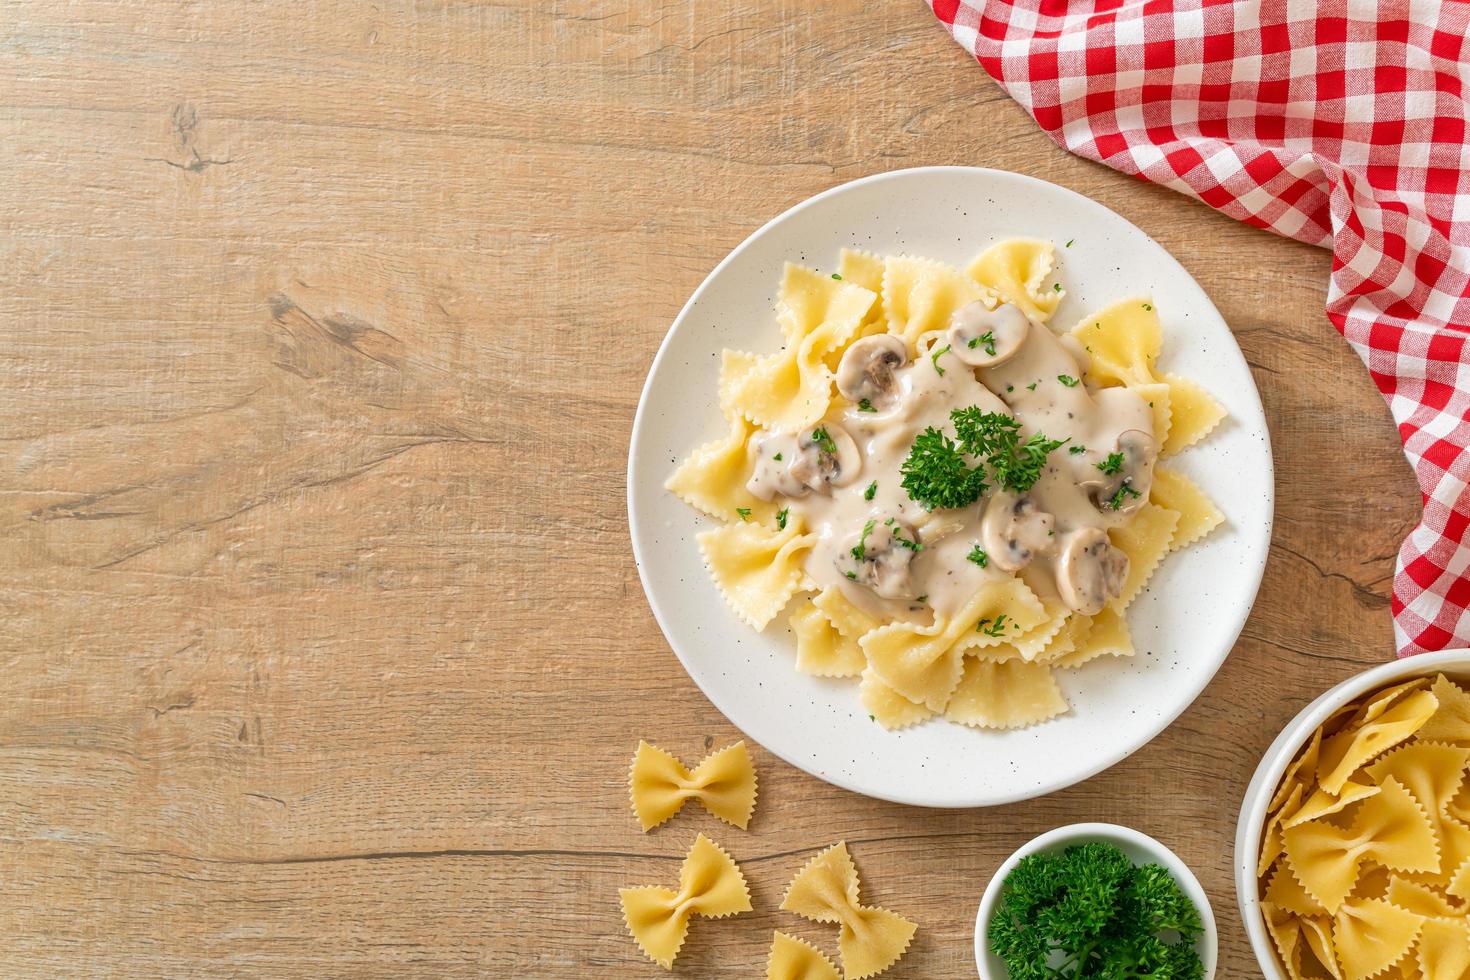 farfalle pasta met champignon witte roomsaus - italiaans eten stijl foto